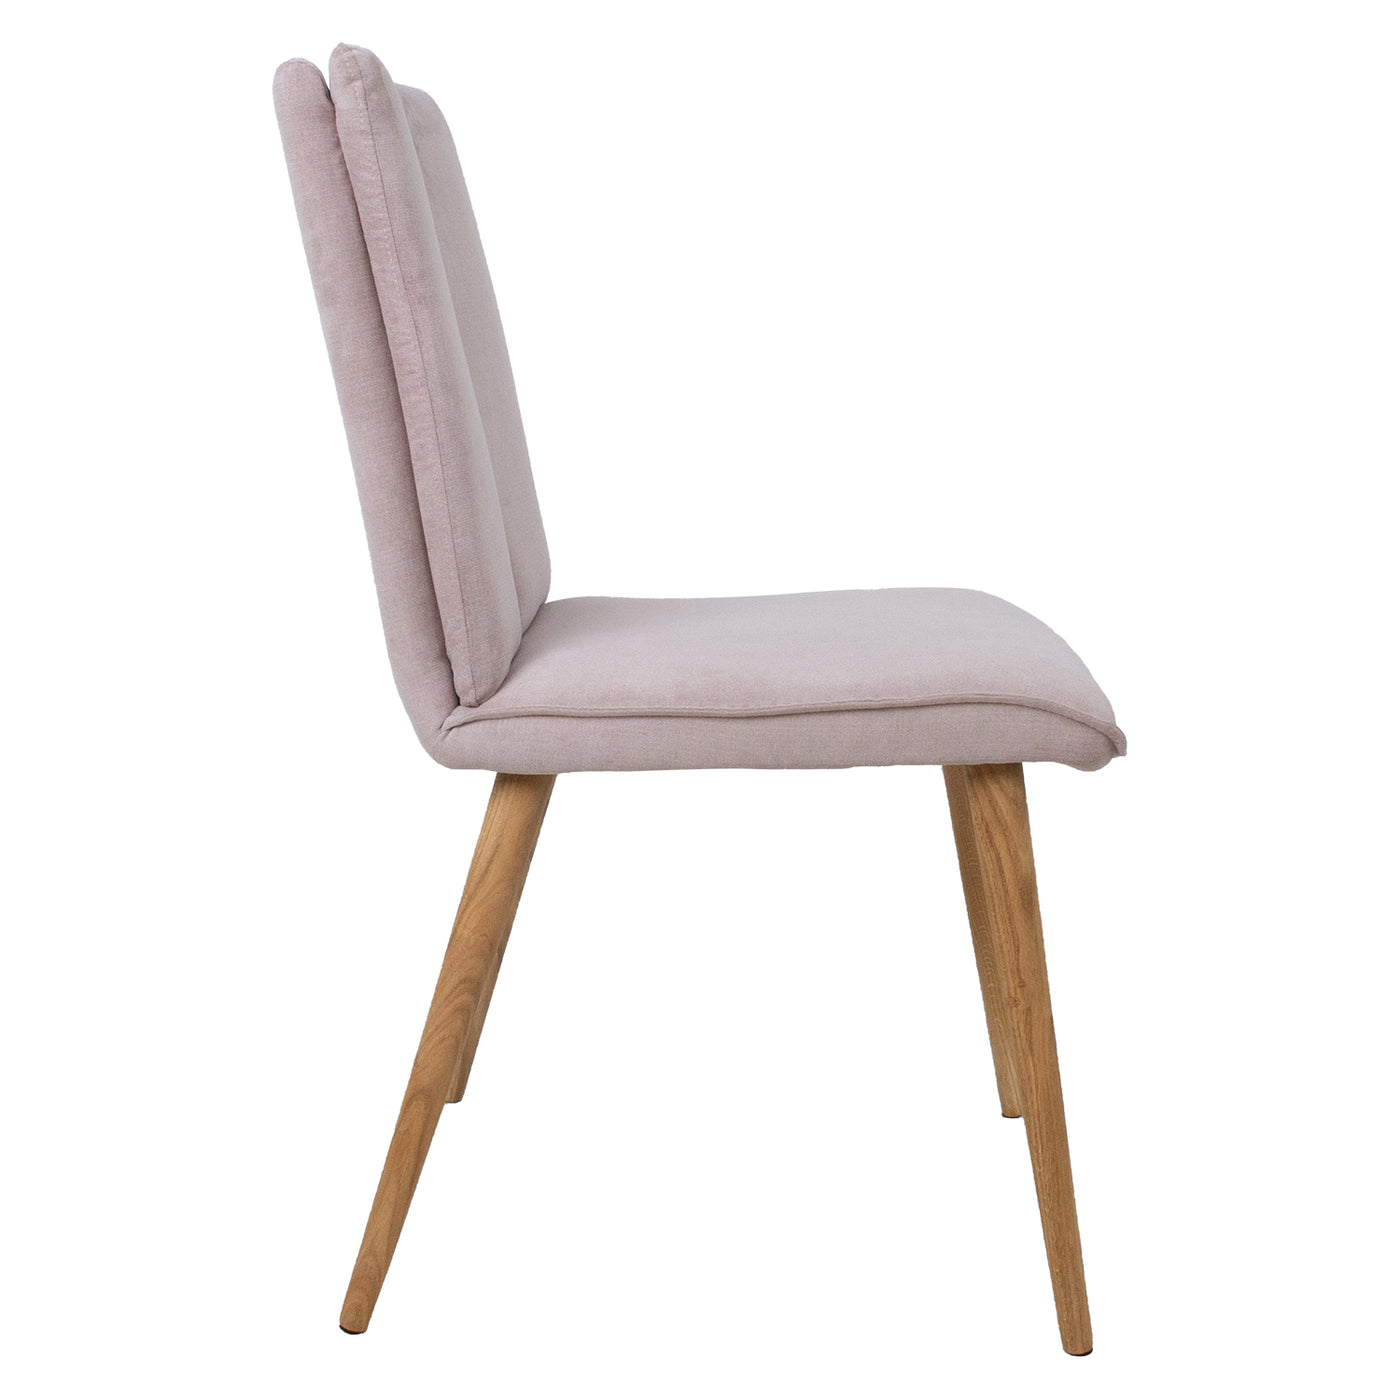 Nova tuoli, vanha roosa/tammi - Mööpeli.com